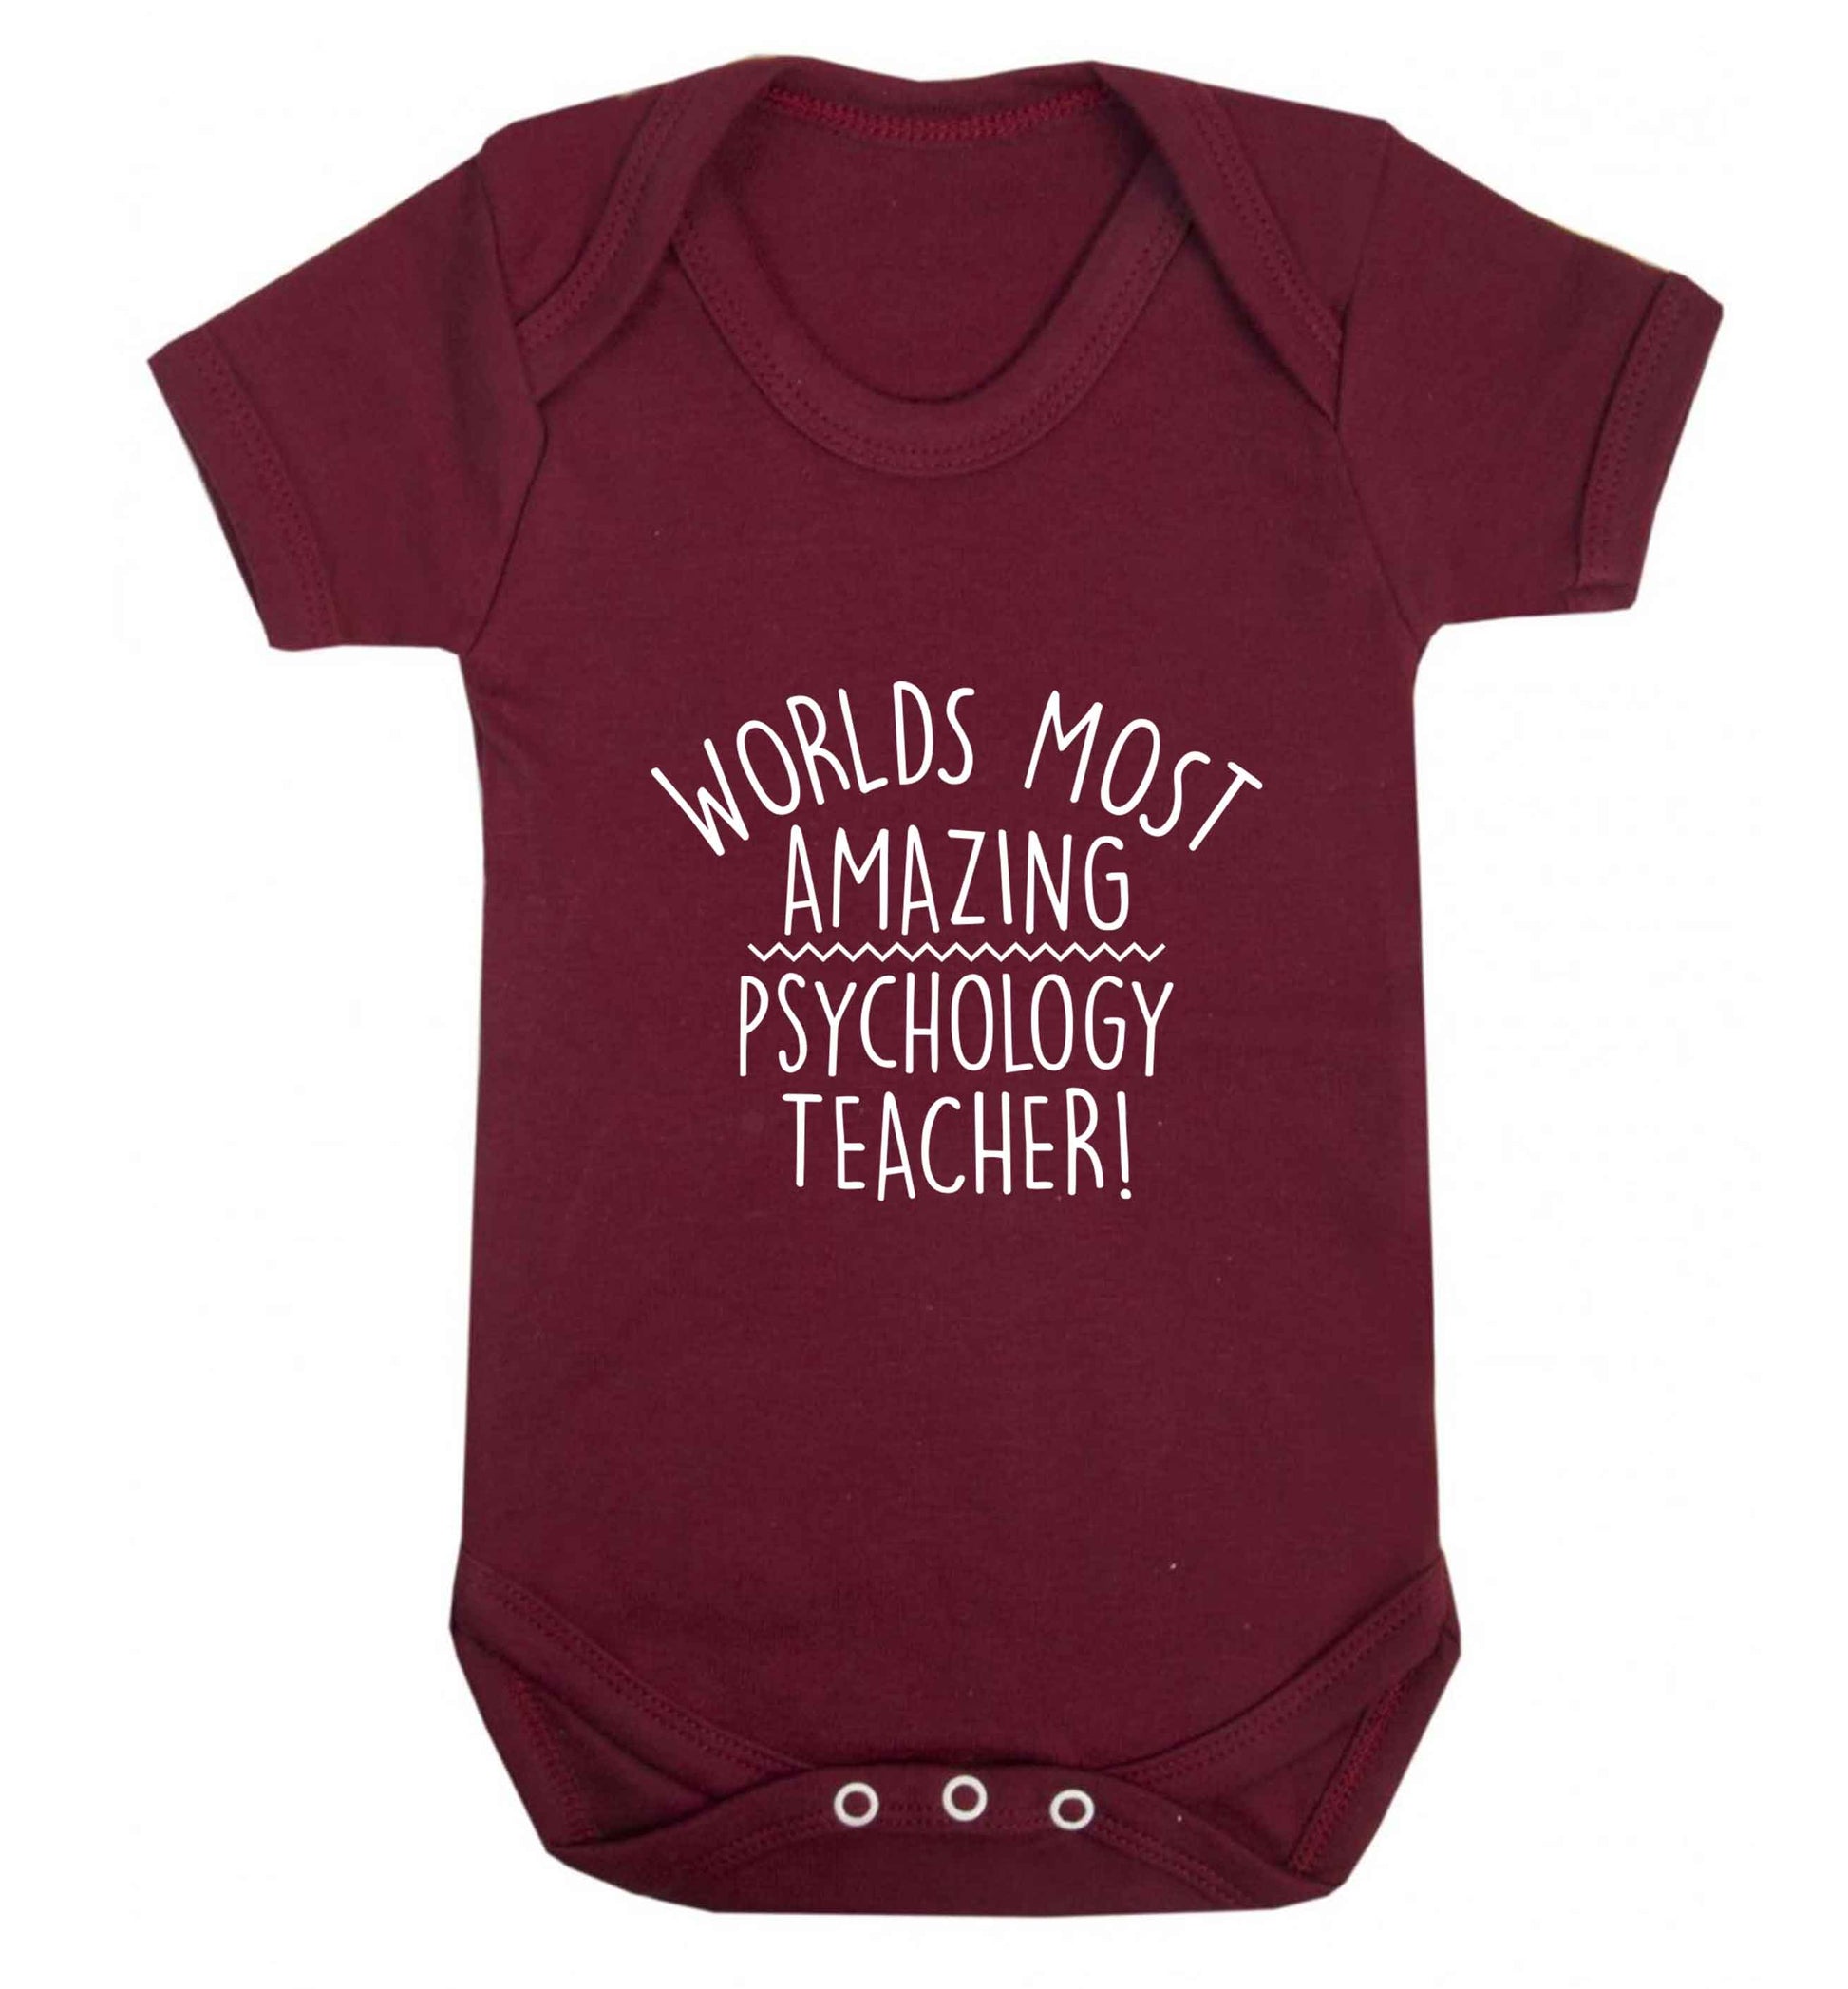 Worlds most amazing psychology teacher baby vest maroon 18-24 months